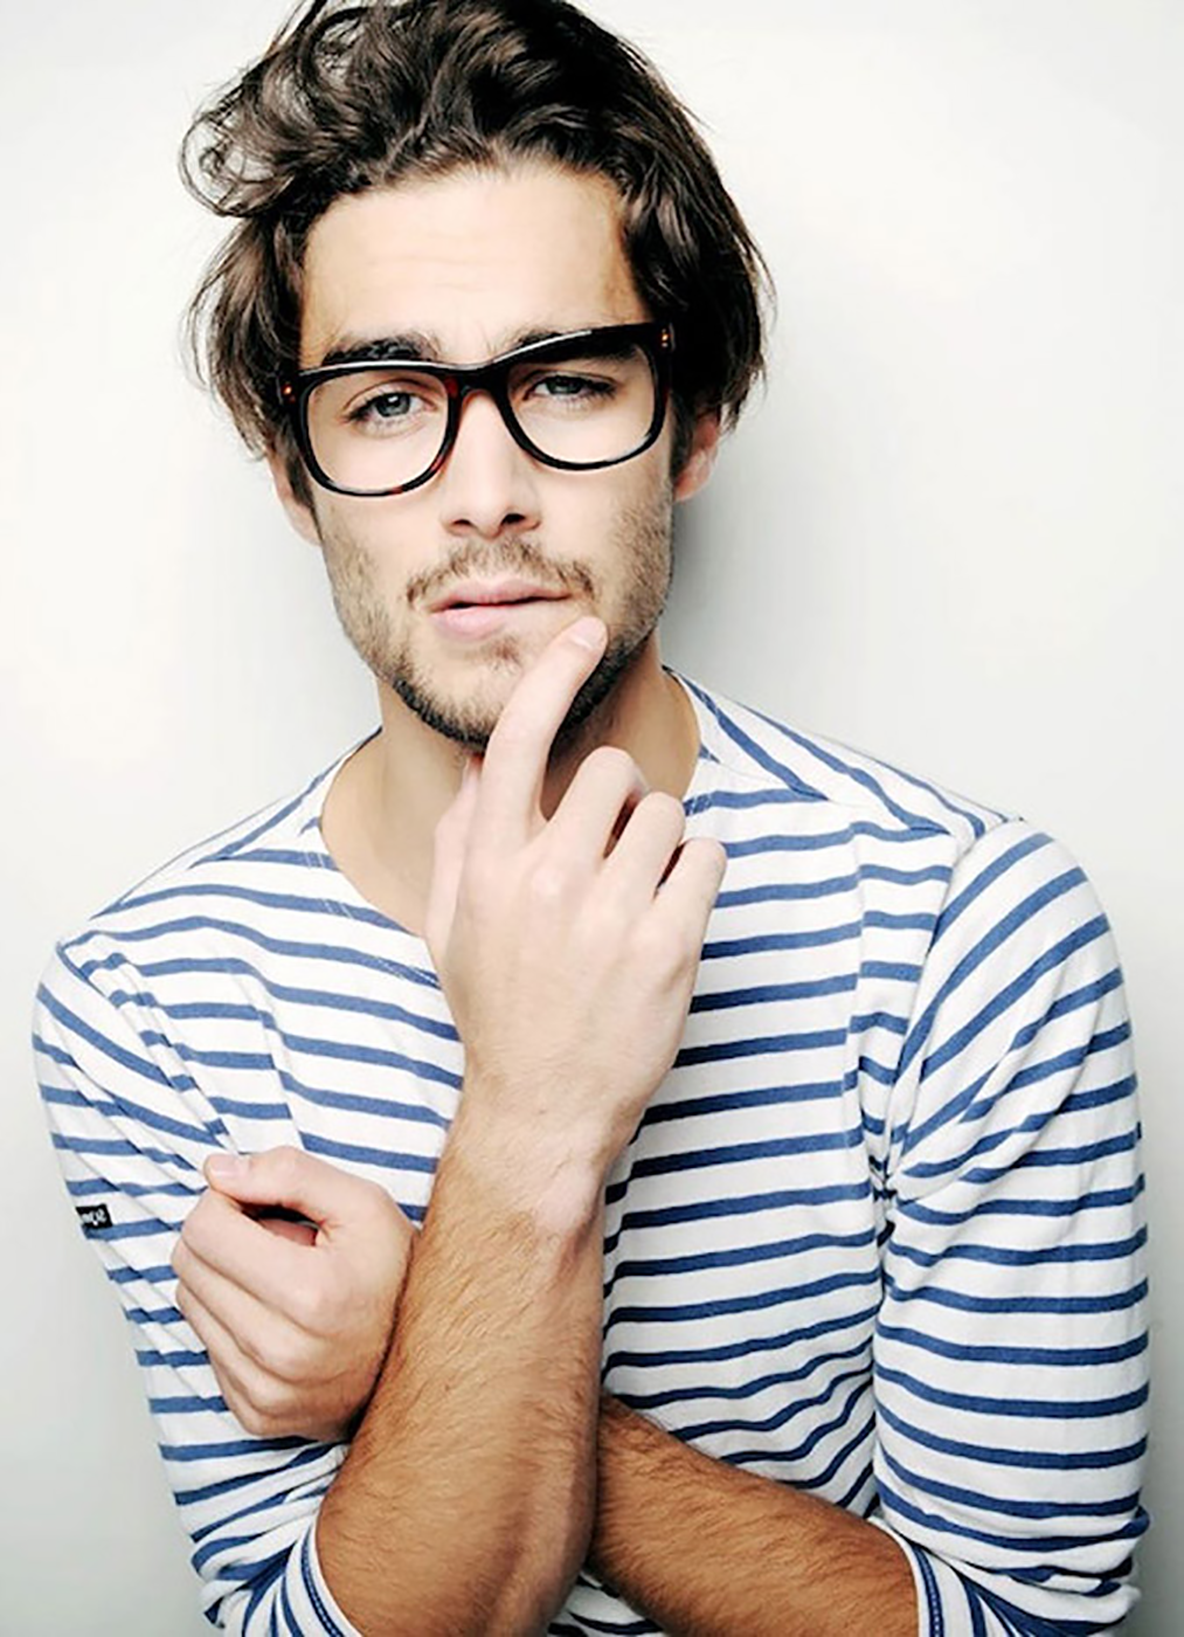 How to match men's hair cut with glasses - Lenskart Blog